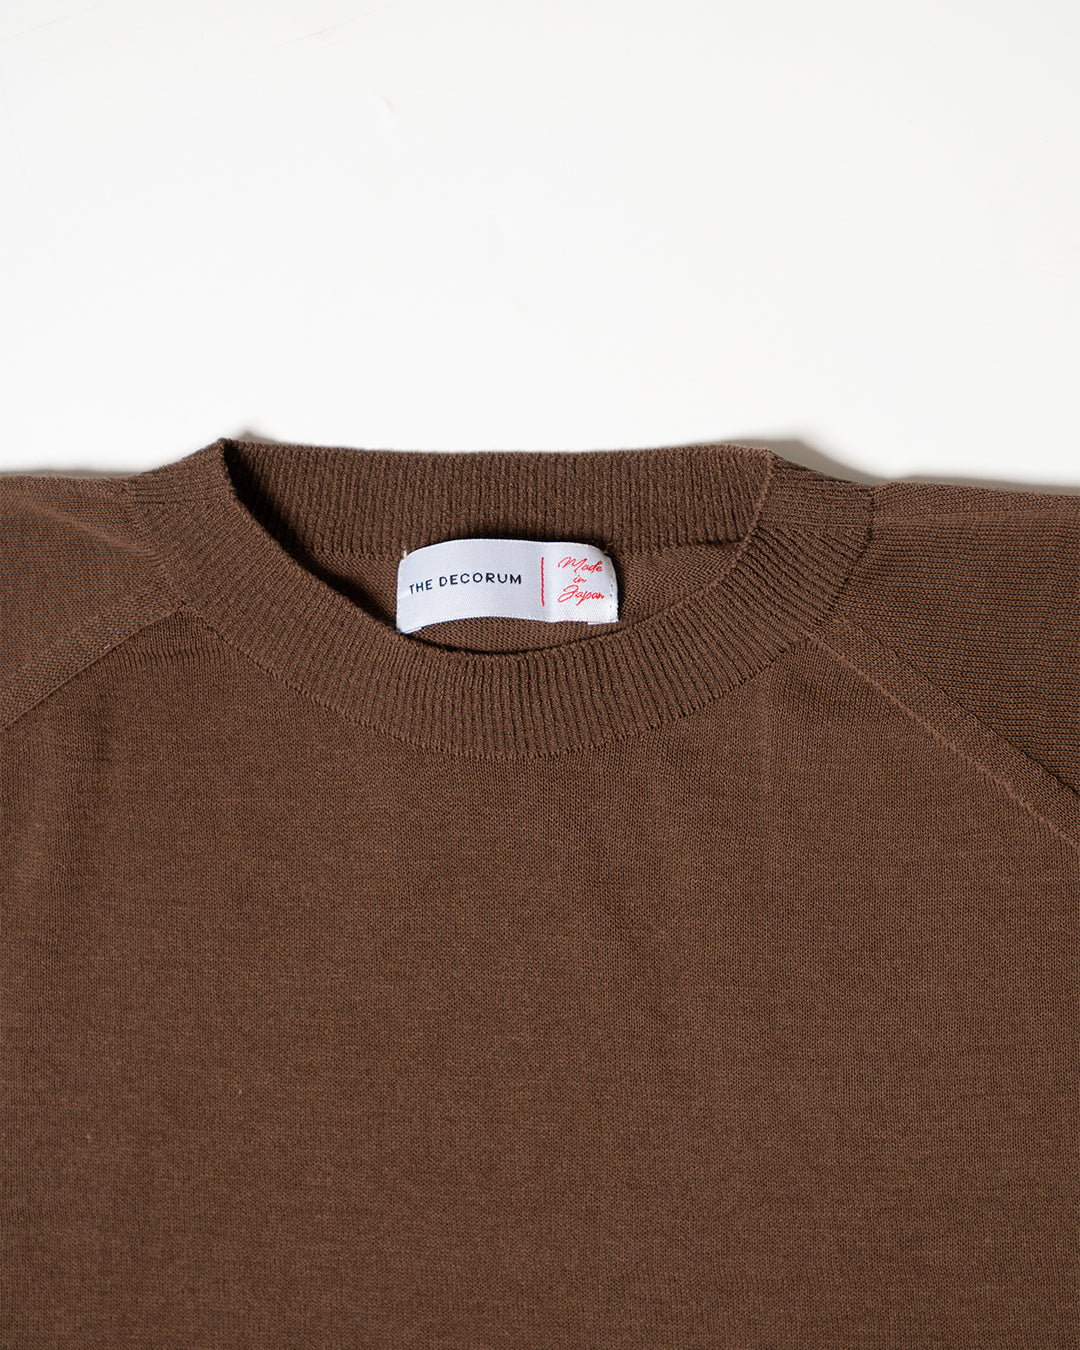 The Decorum Off Duty Brown Knit T-Shirt (New)